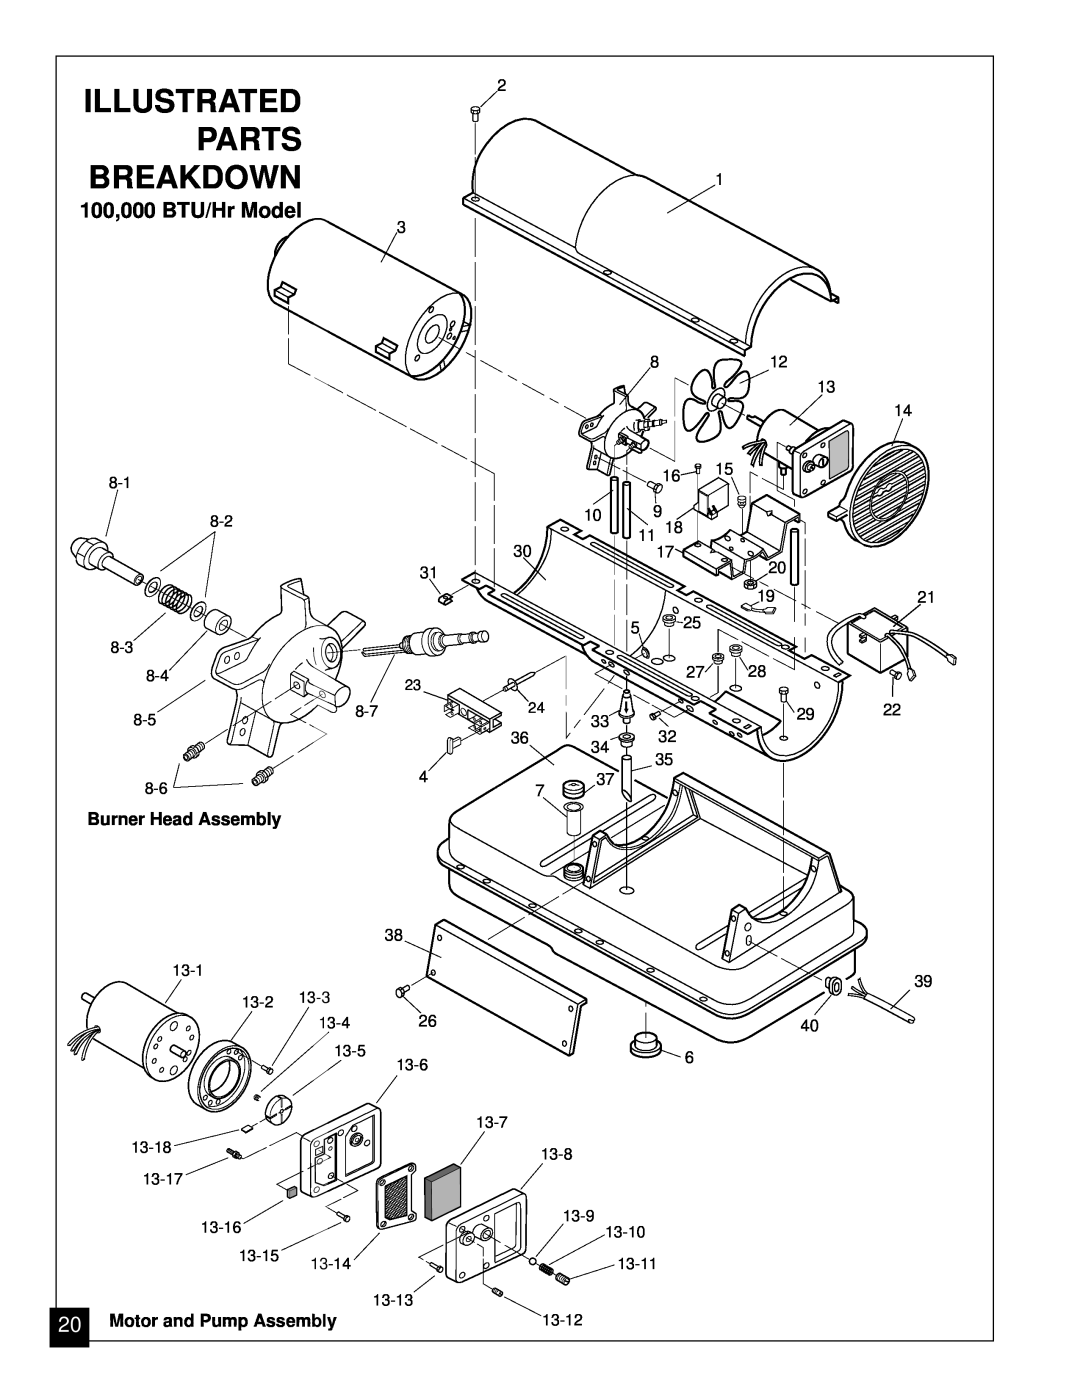 Jet Tools J100ECA, J150ECA owner manual Parts, Breakdown, Illustrated, 100,000 BTU/Hr Model, Burner Head Assembly 